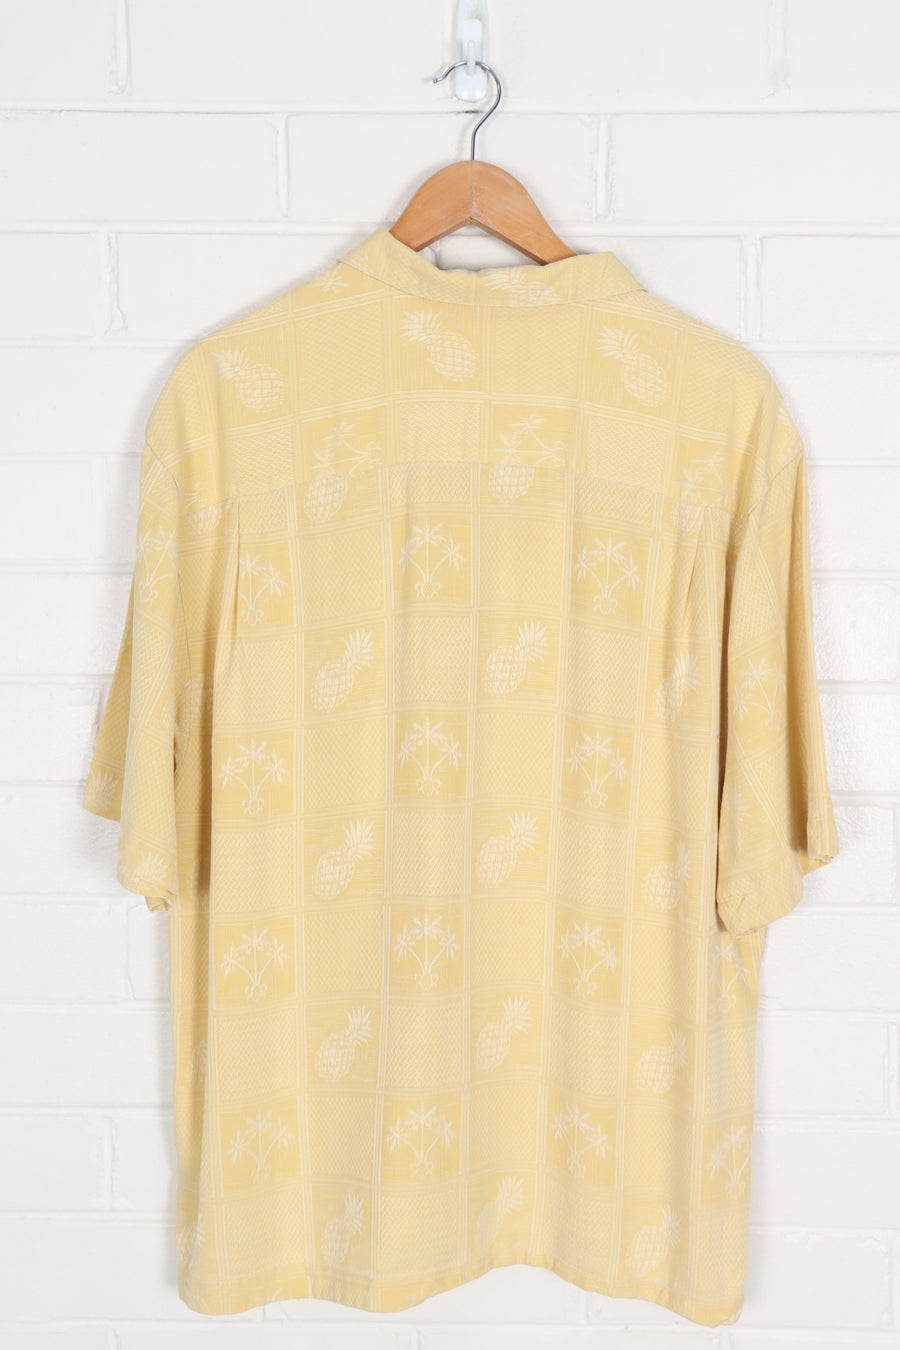 Pale Yellow Pineapple & Palm Trees Silk Button Up Shirt (L-XL)